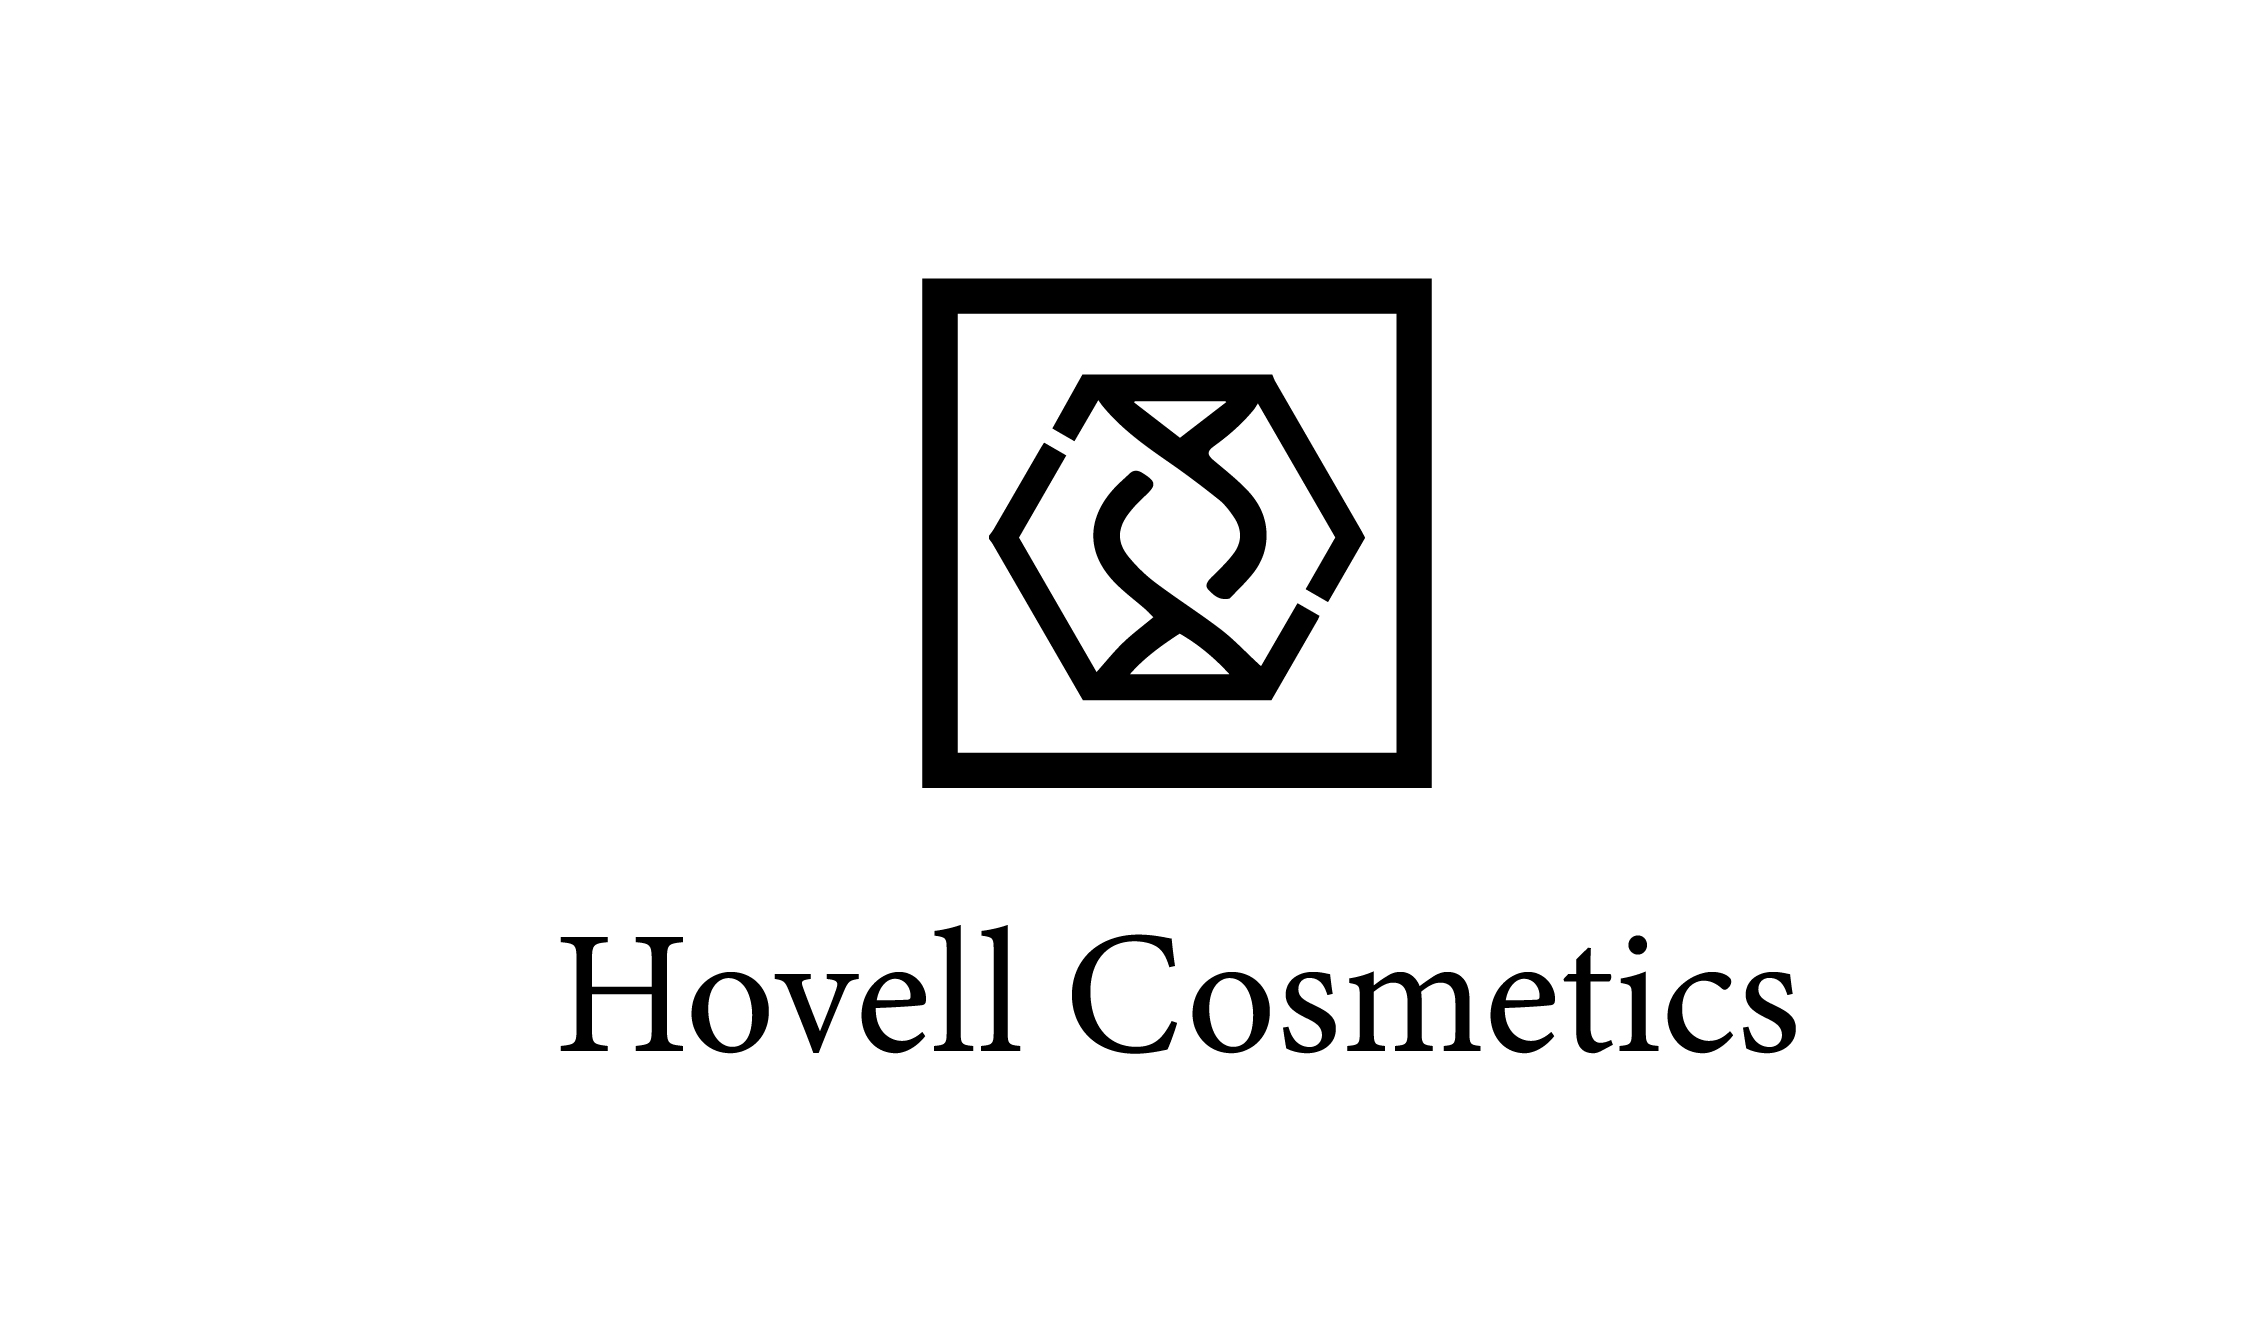 Hovell Cosmetics